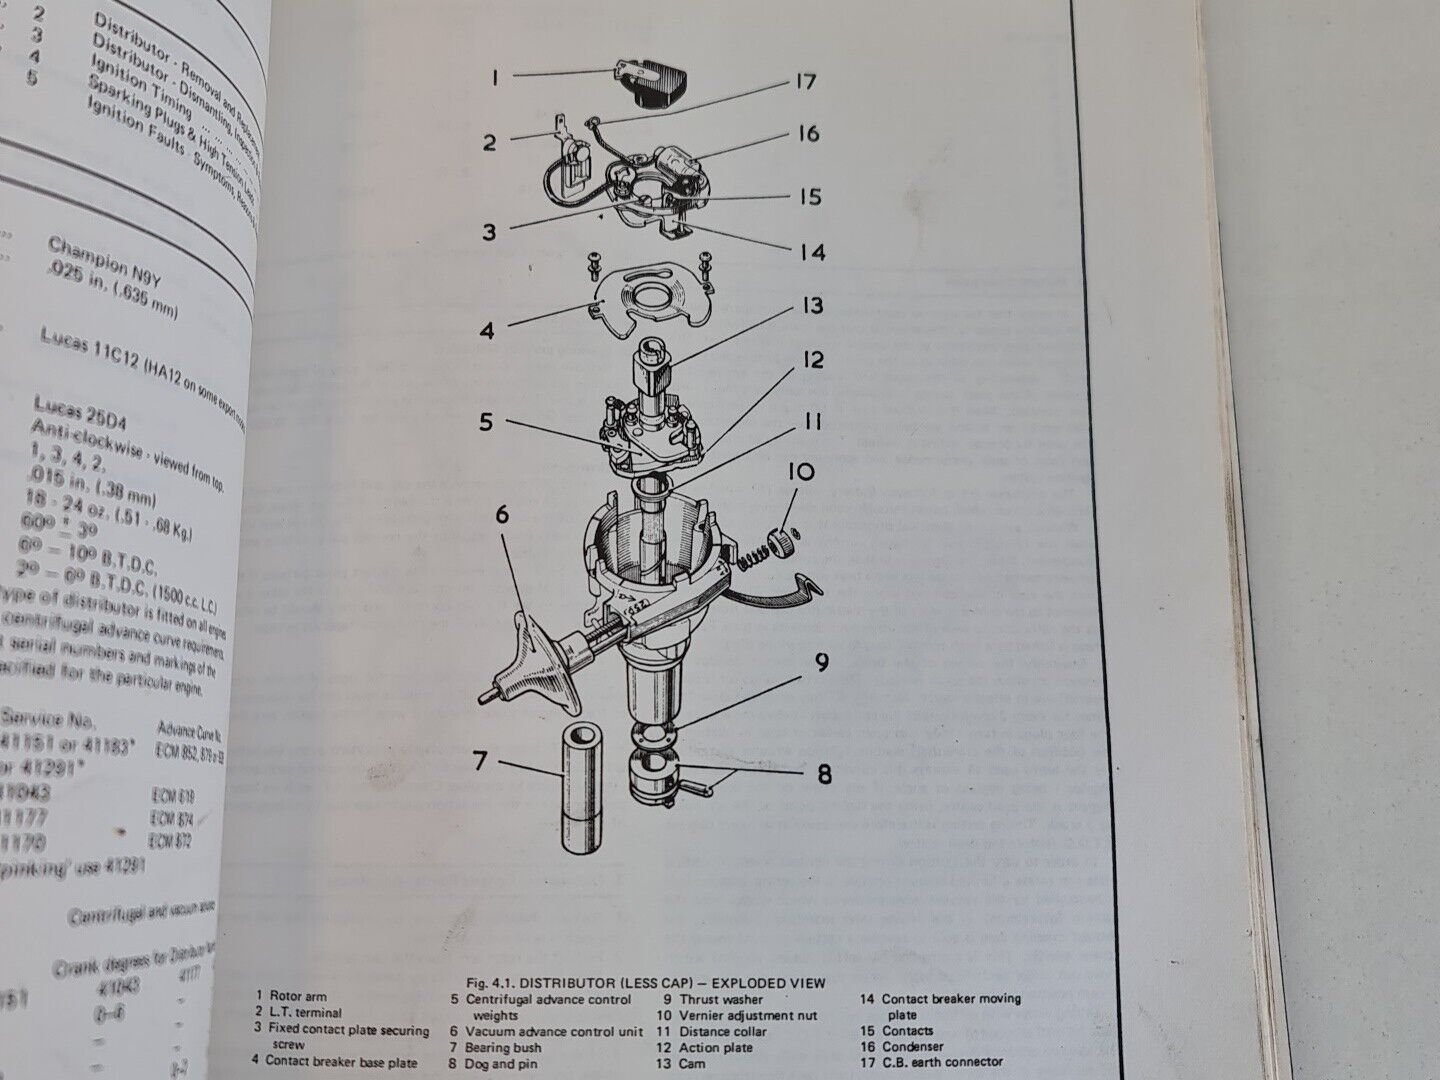 Haynes - Hillman Hunter Owner's Workshop Manual by J.H. Haynes (1971)